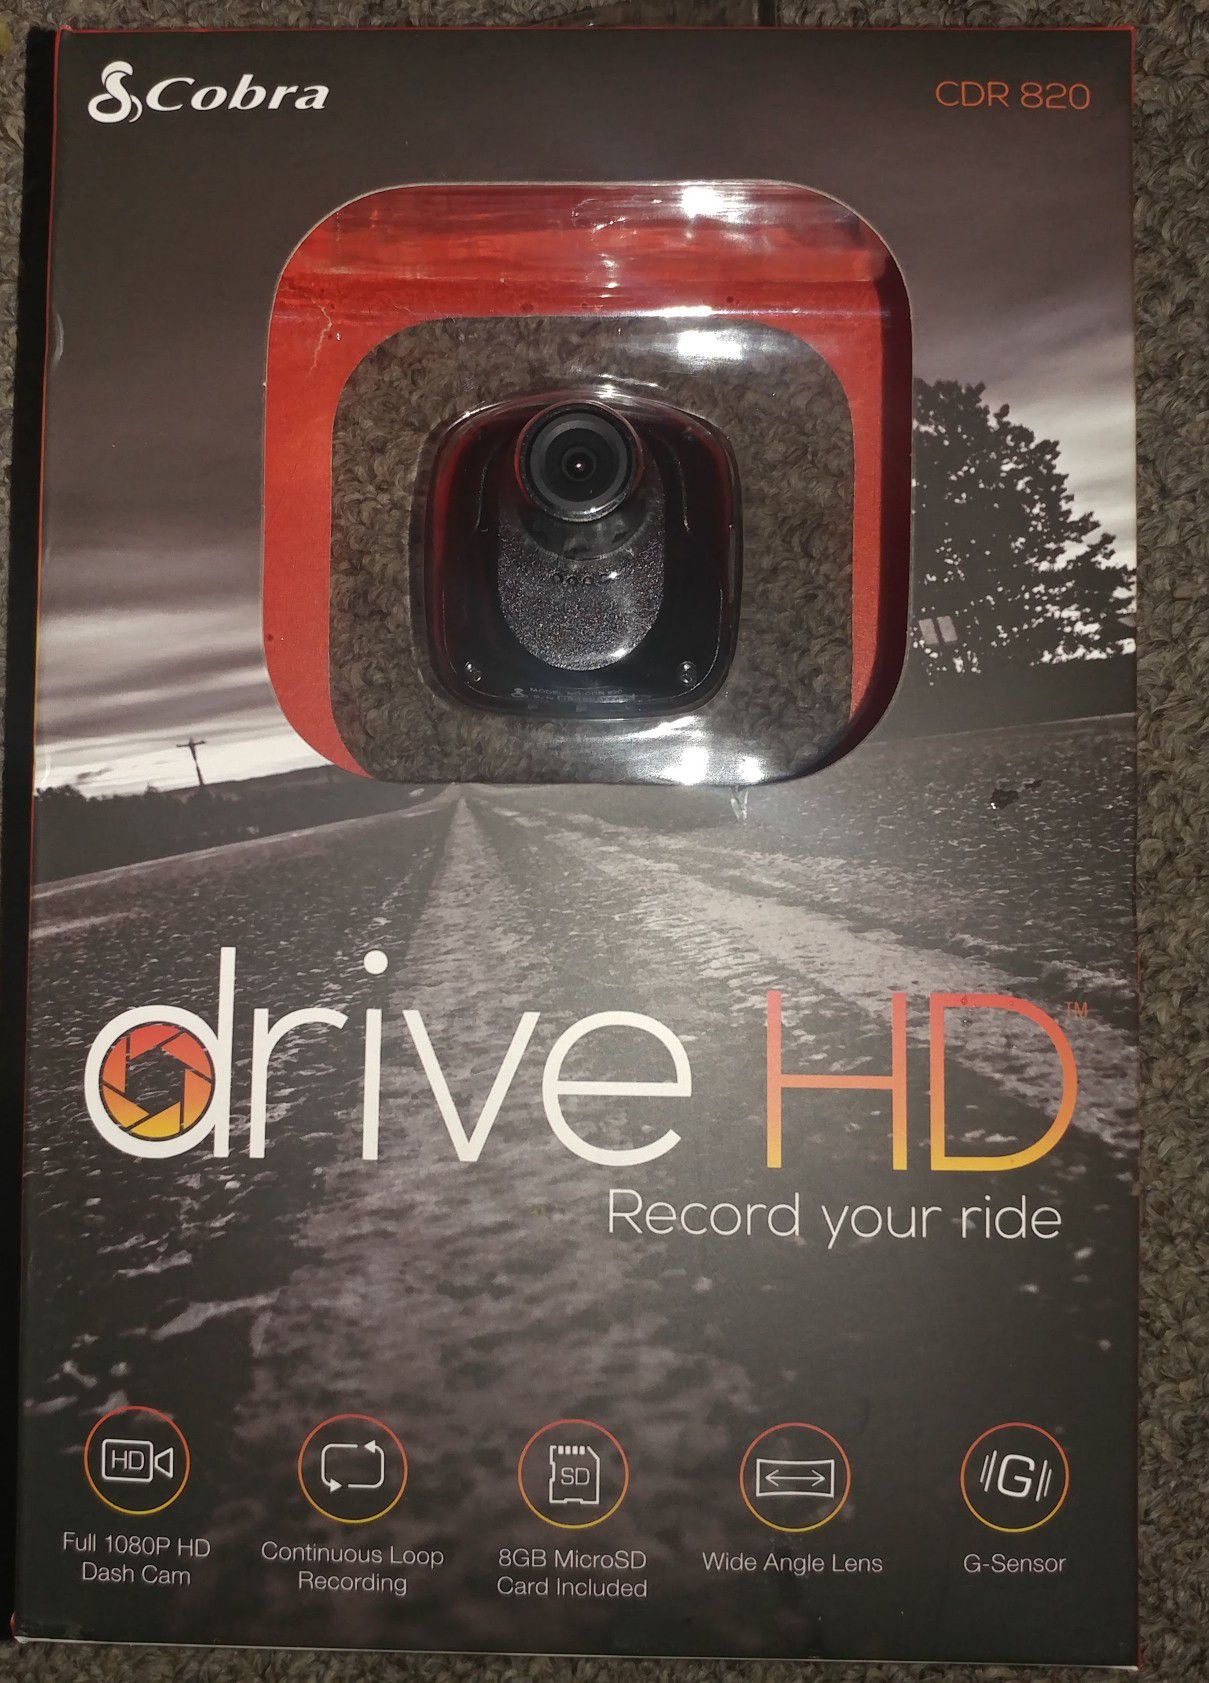 Cobra drive HD digital camera